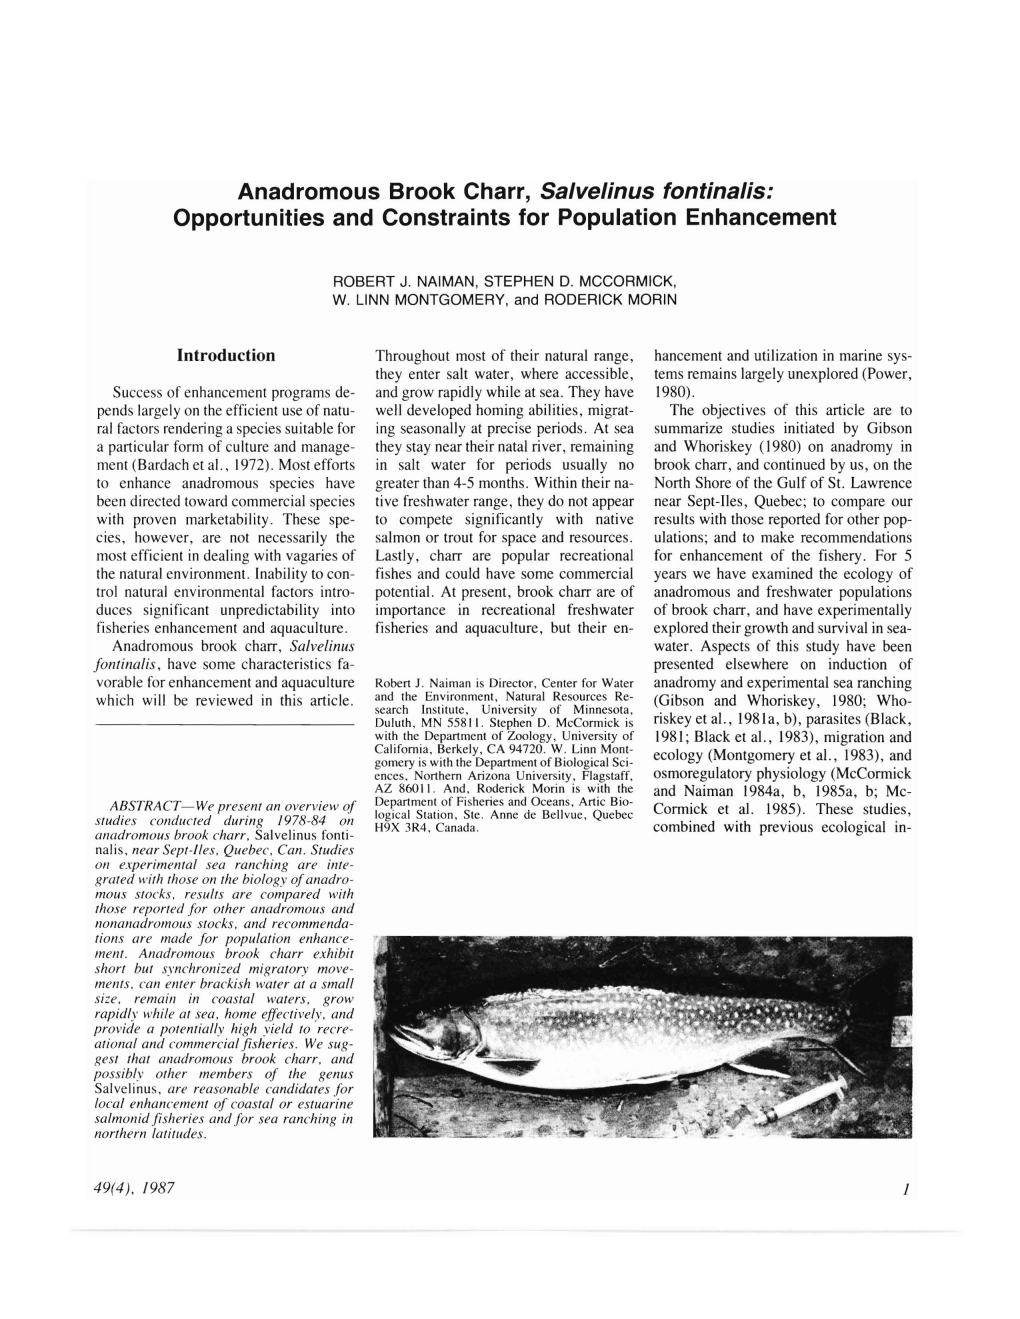 Anadromous Brook Charr, Salvelinus Fontinalis: Opportunities and Constraints for Population Enhancement